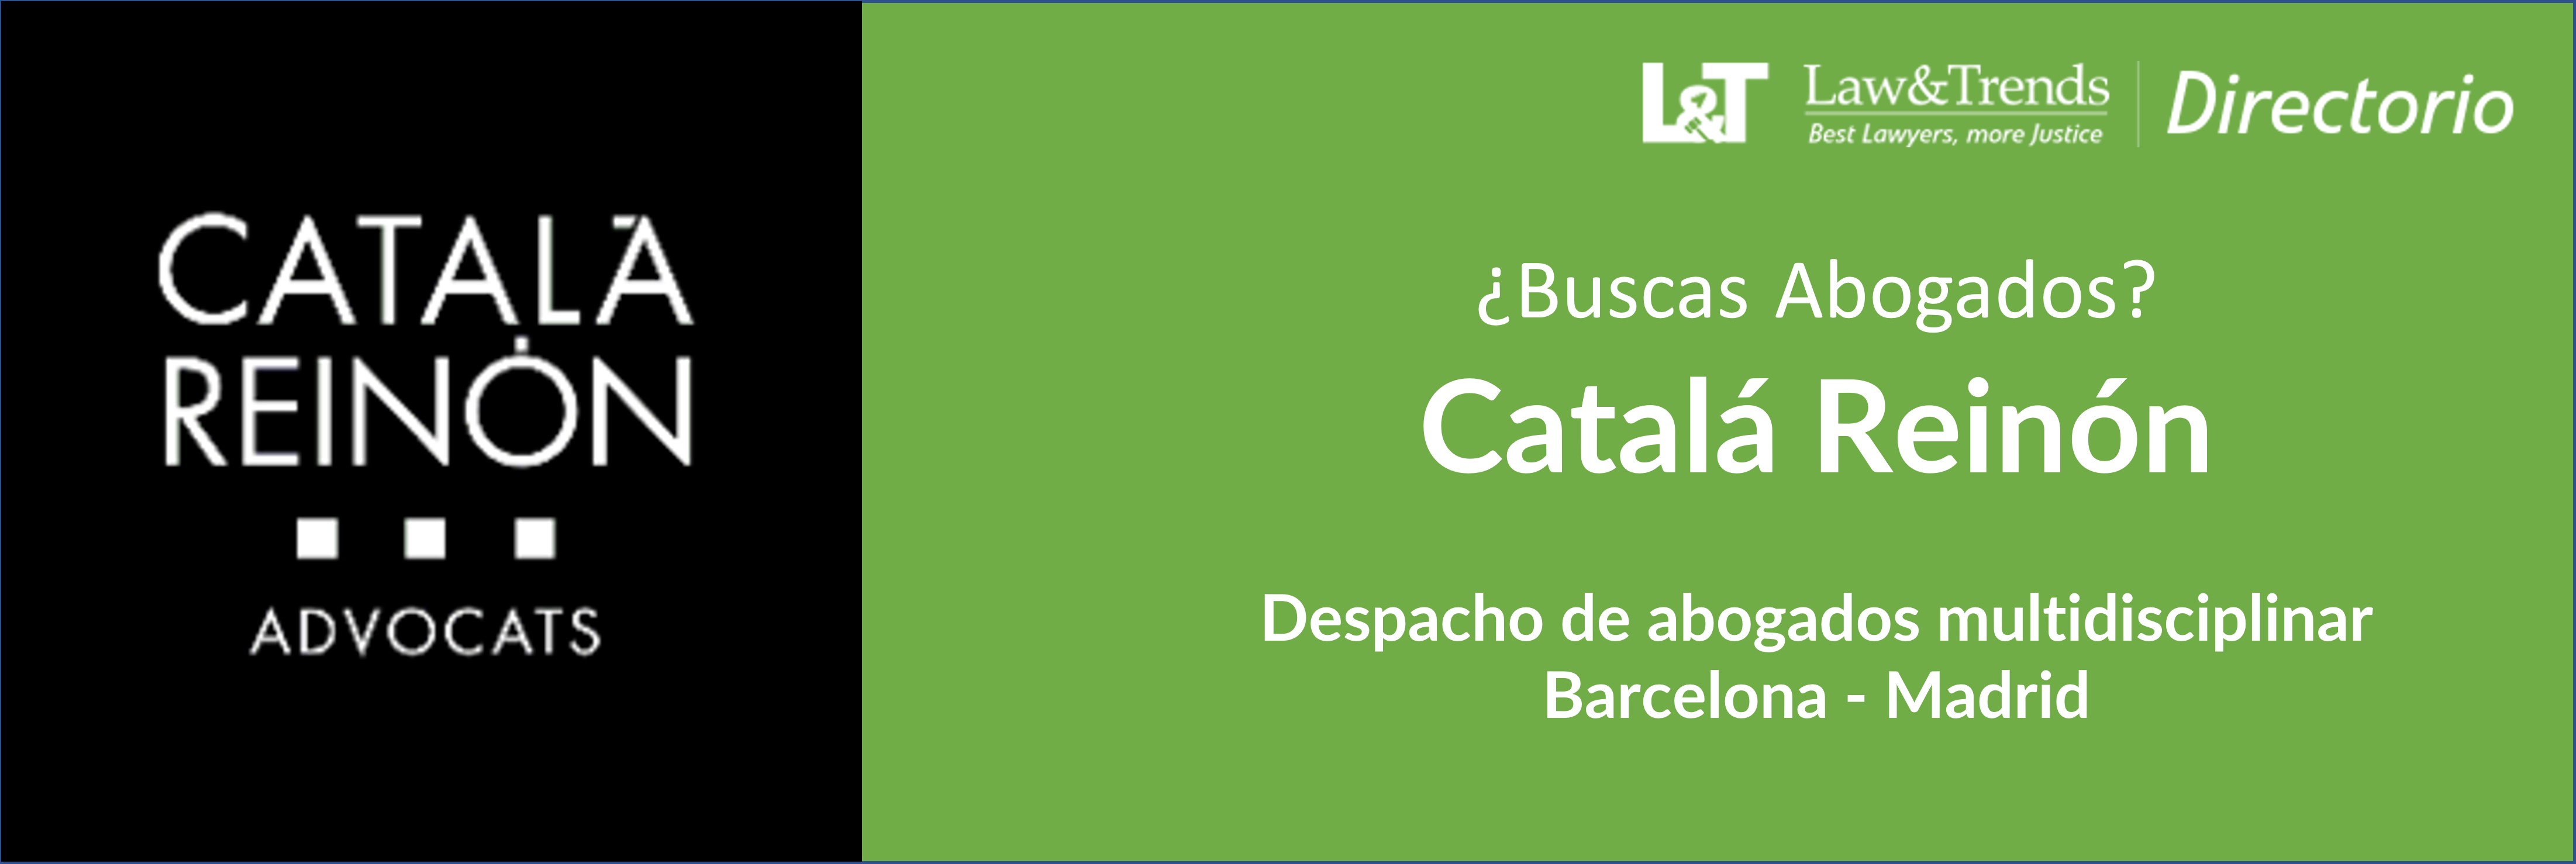 Catala abogados Madrid Barcelona
